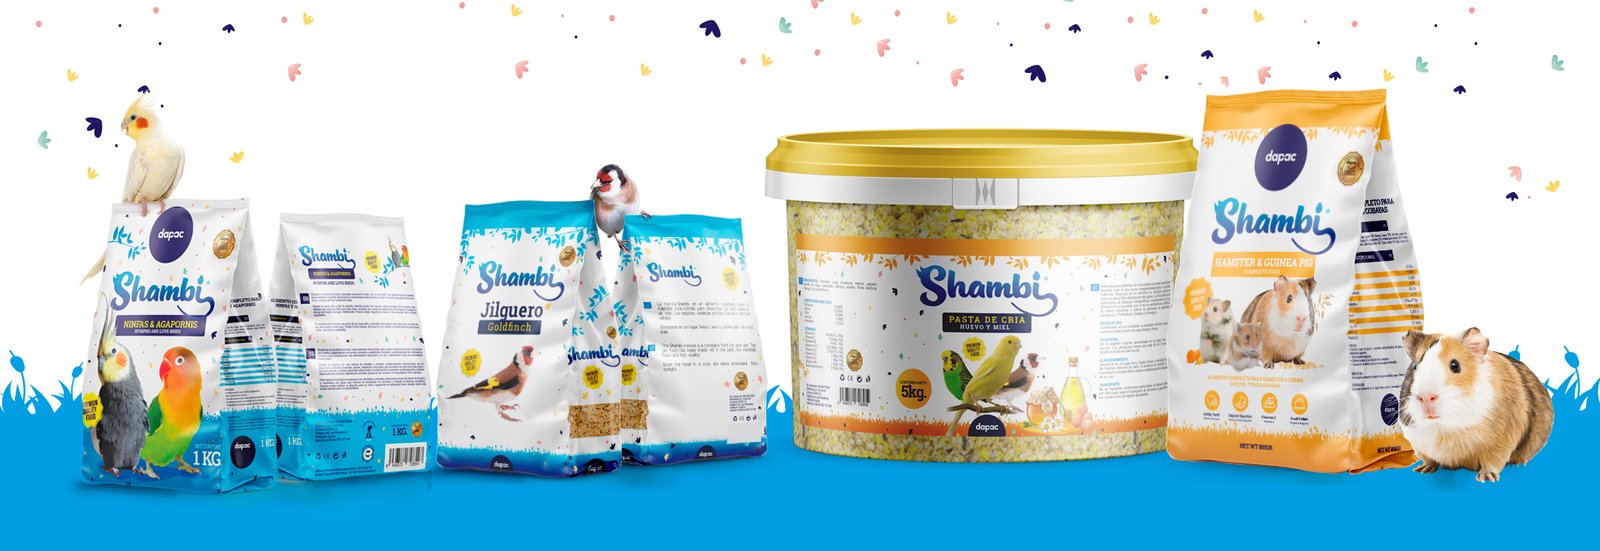 familia de productos shambi etiquetas